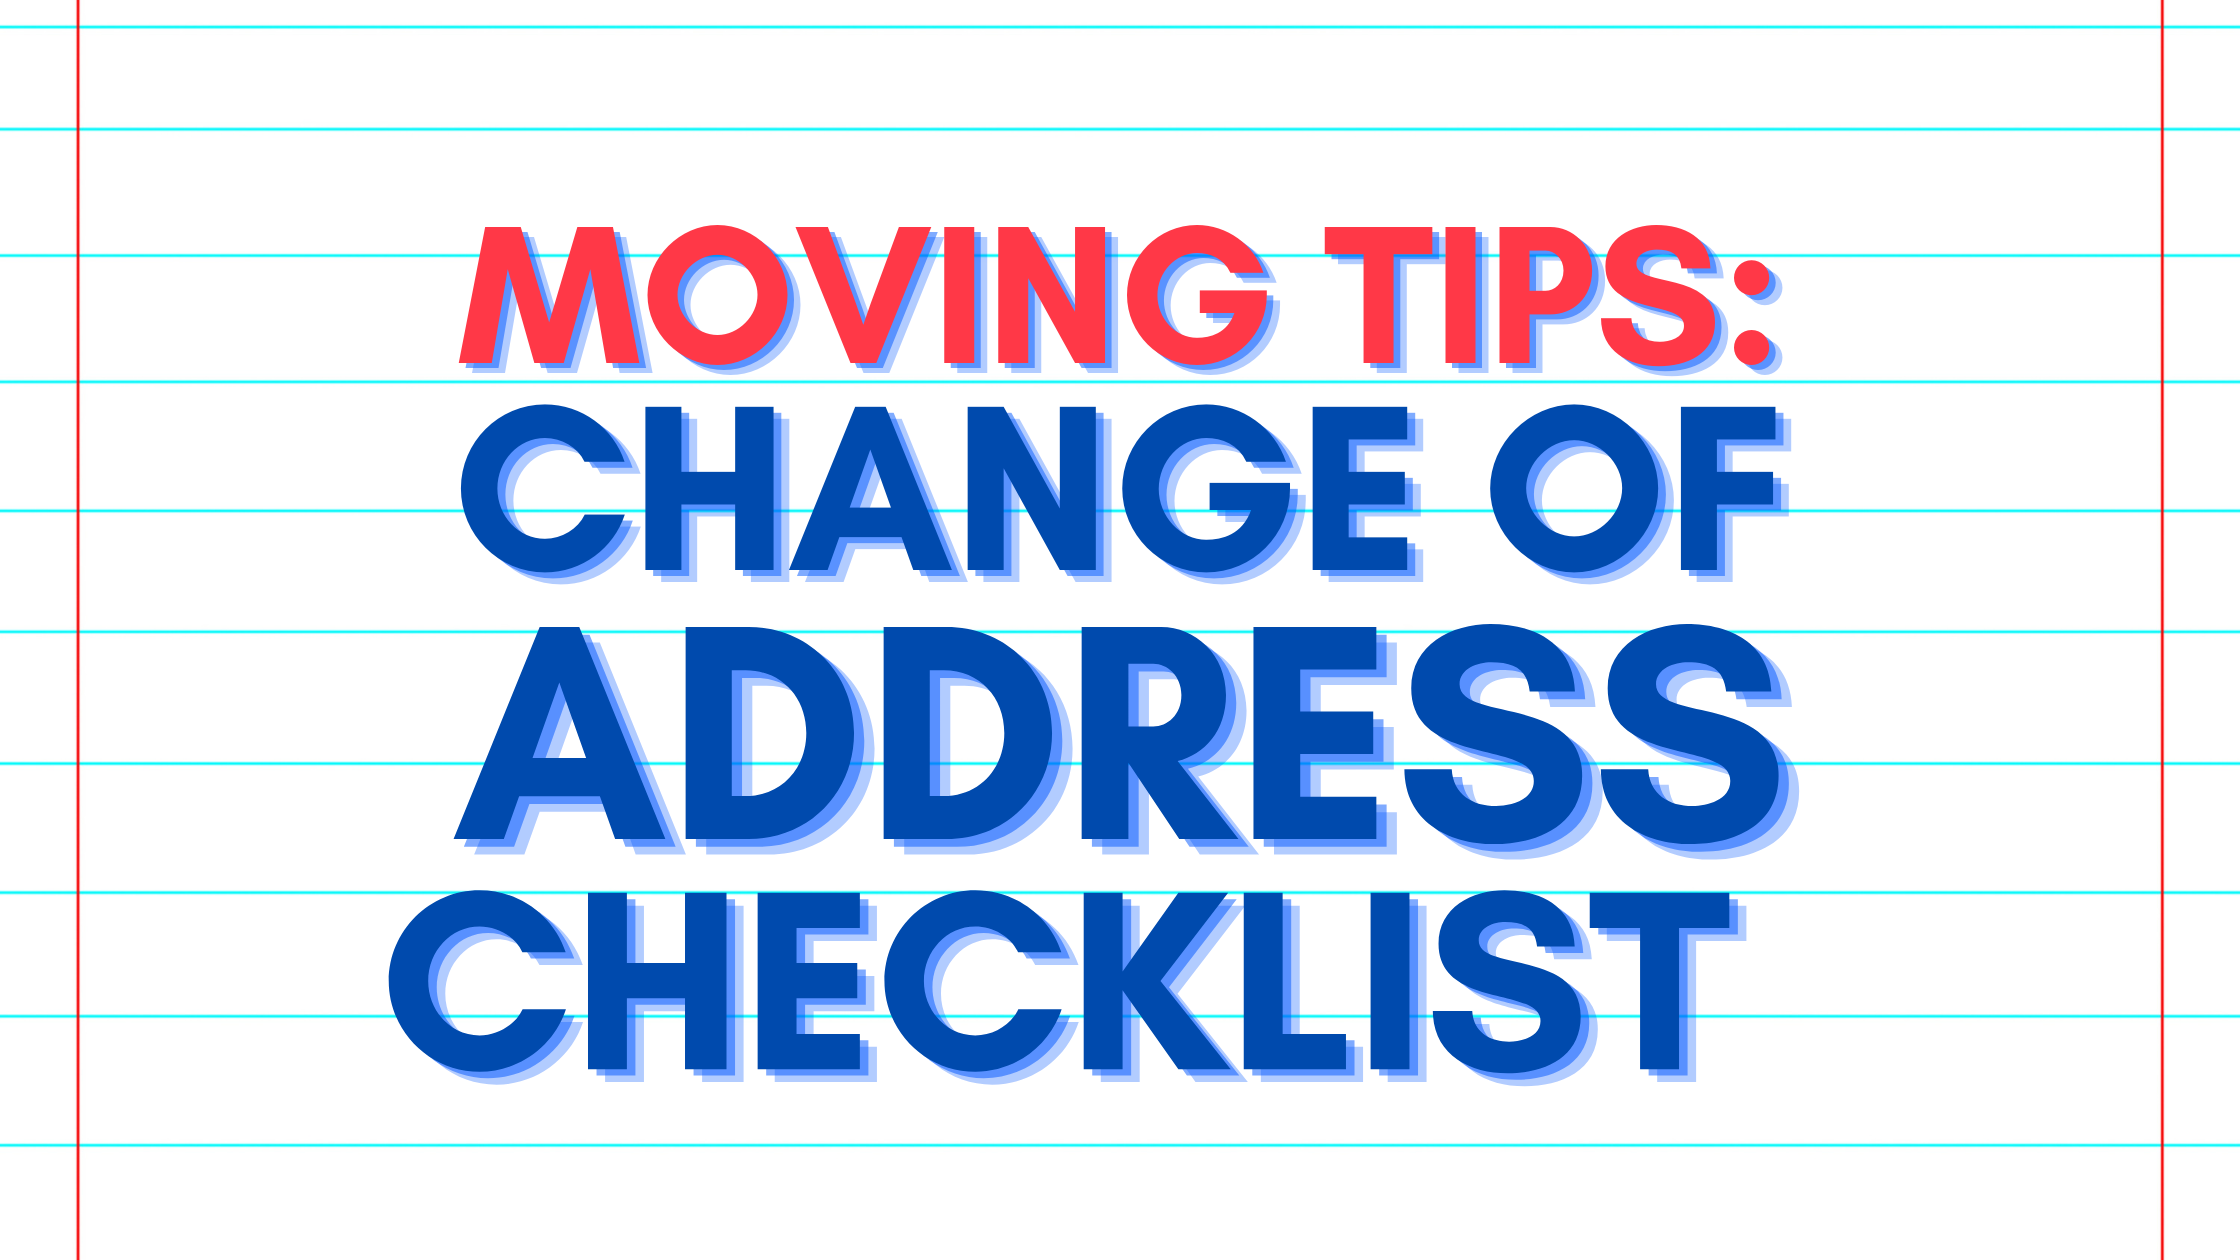 Moving Tips: Change of Address Checklist